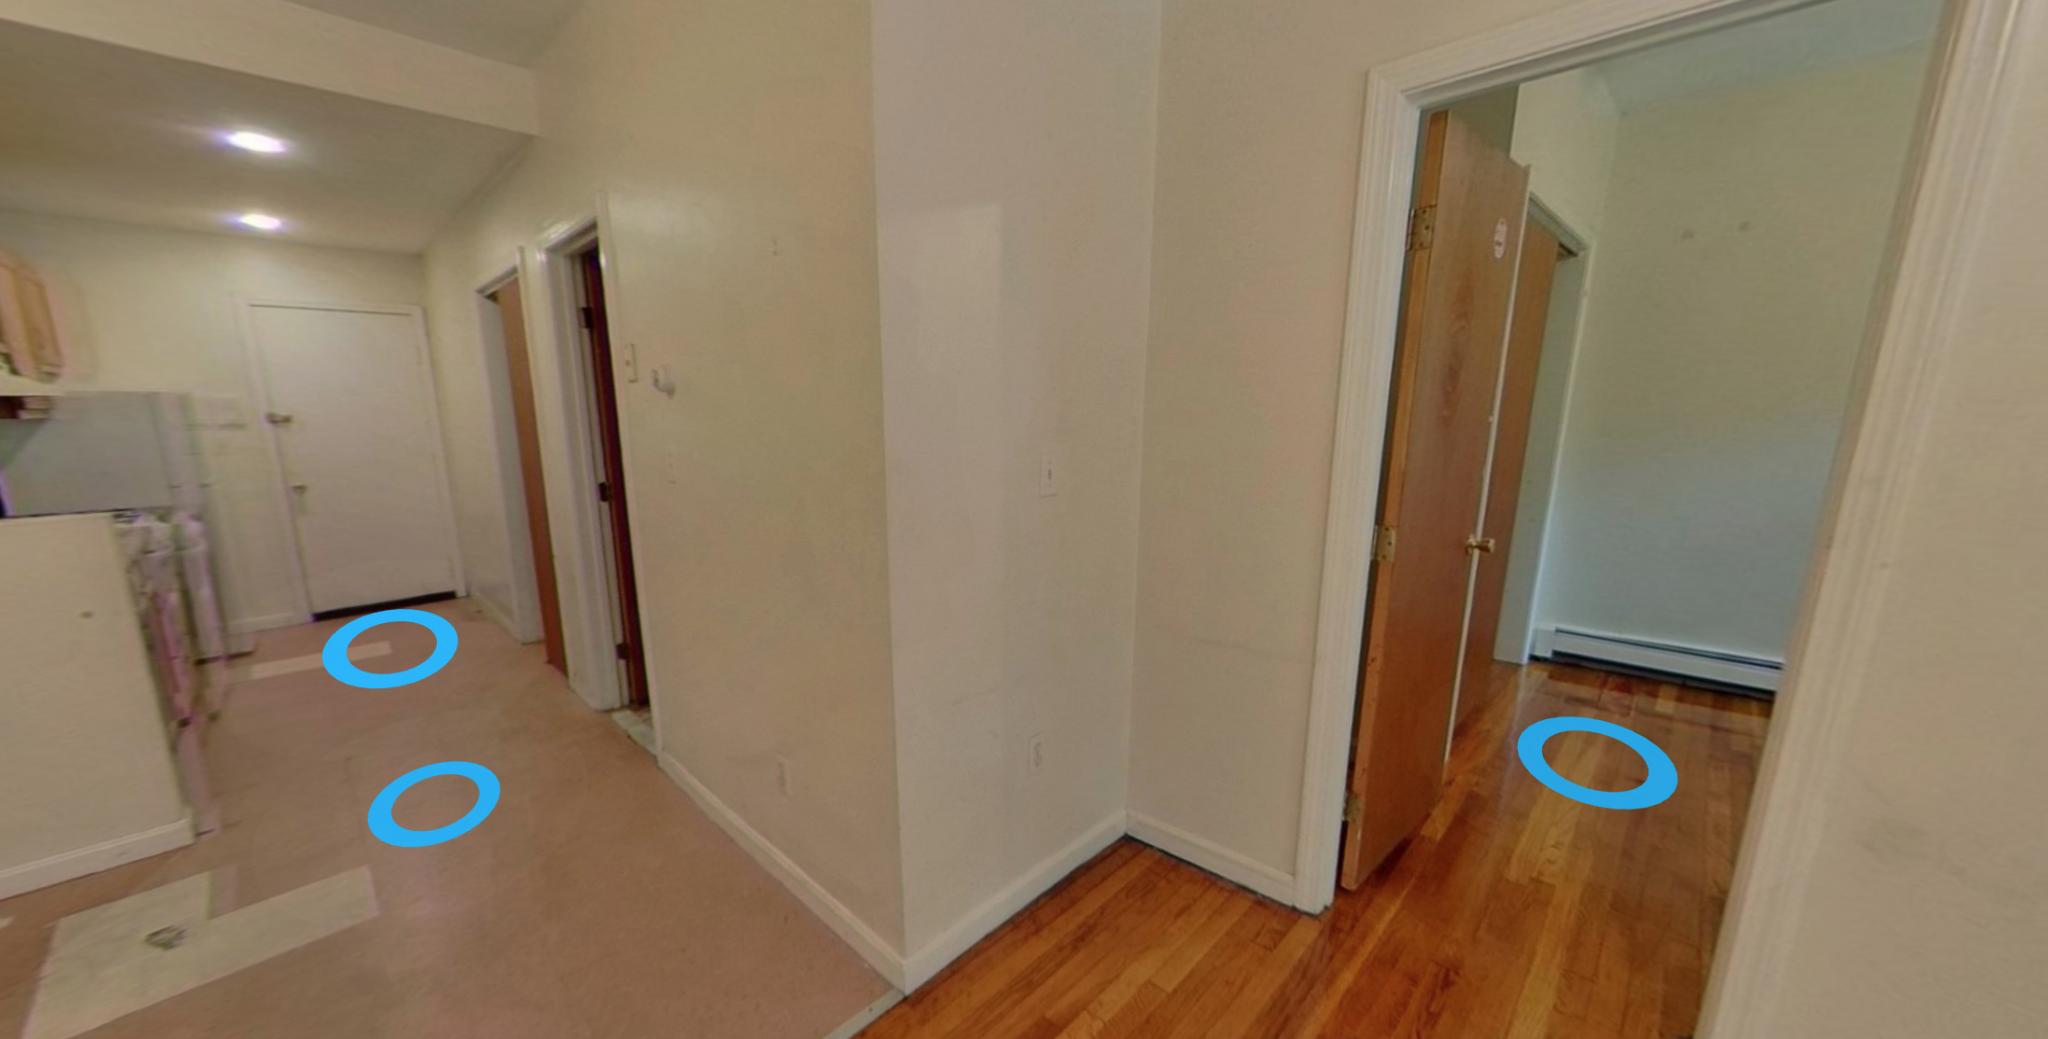 Photos of apartment on Parker,Boston MA 02120